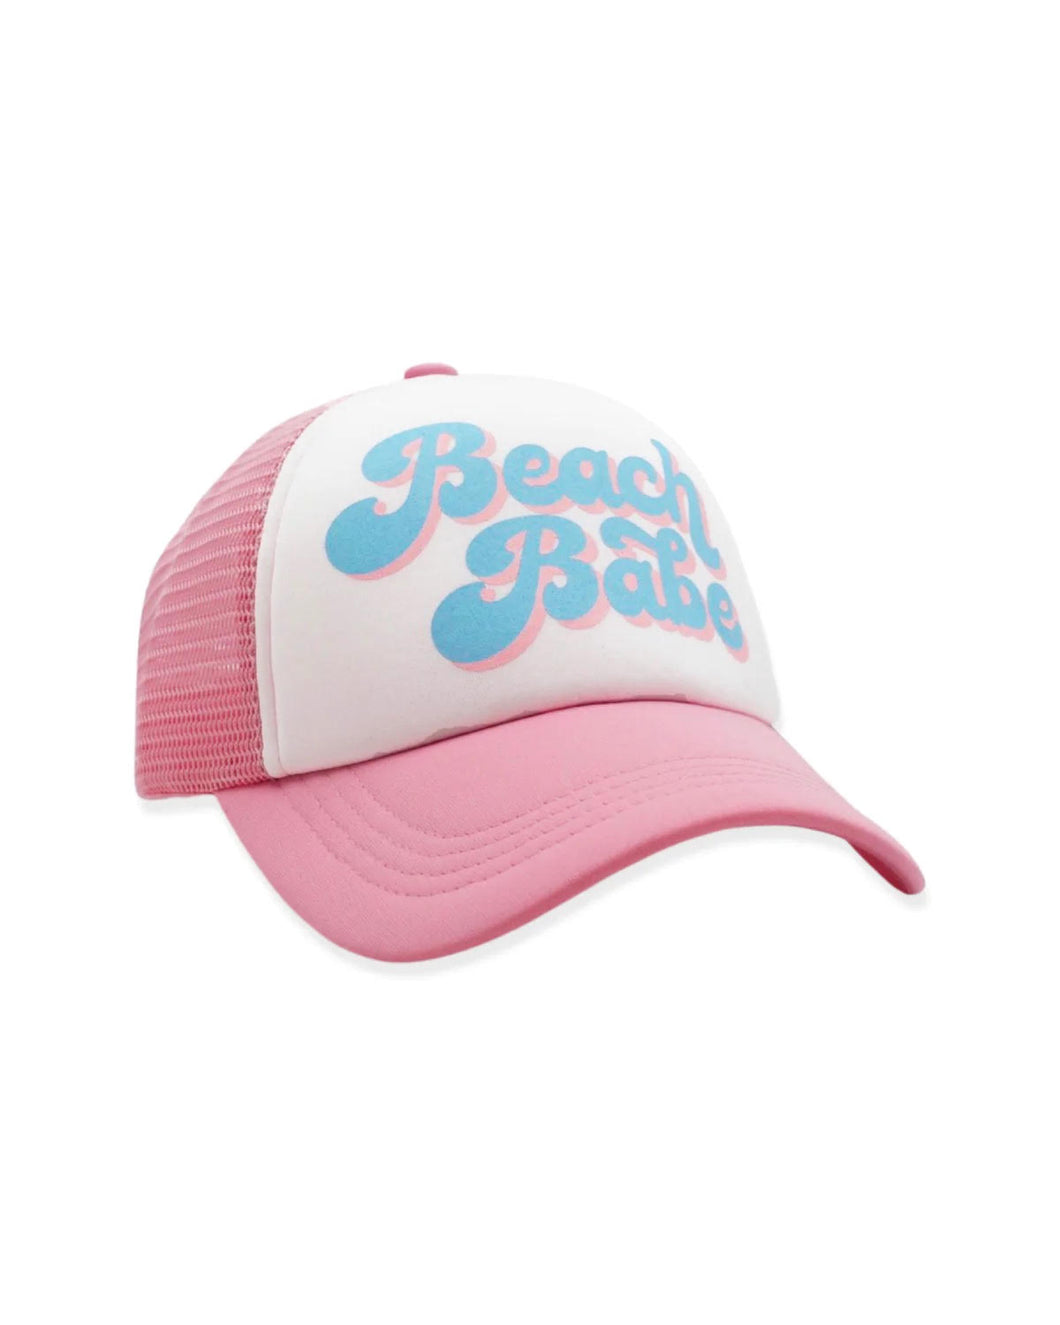 Feather 4 Arrow Beach Babe Trucker Hat